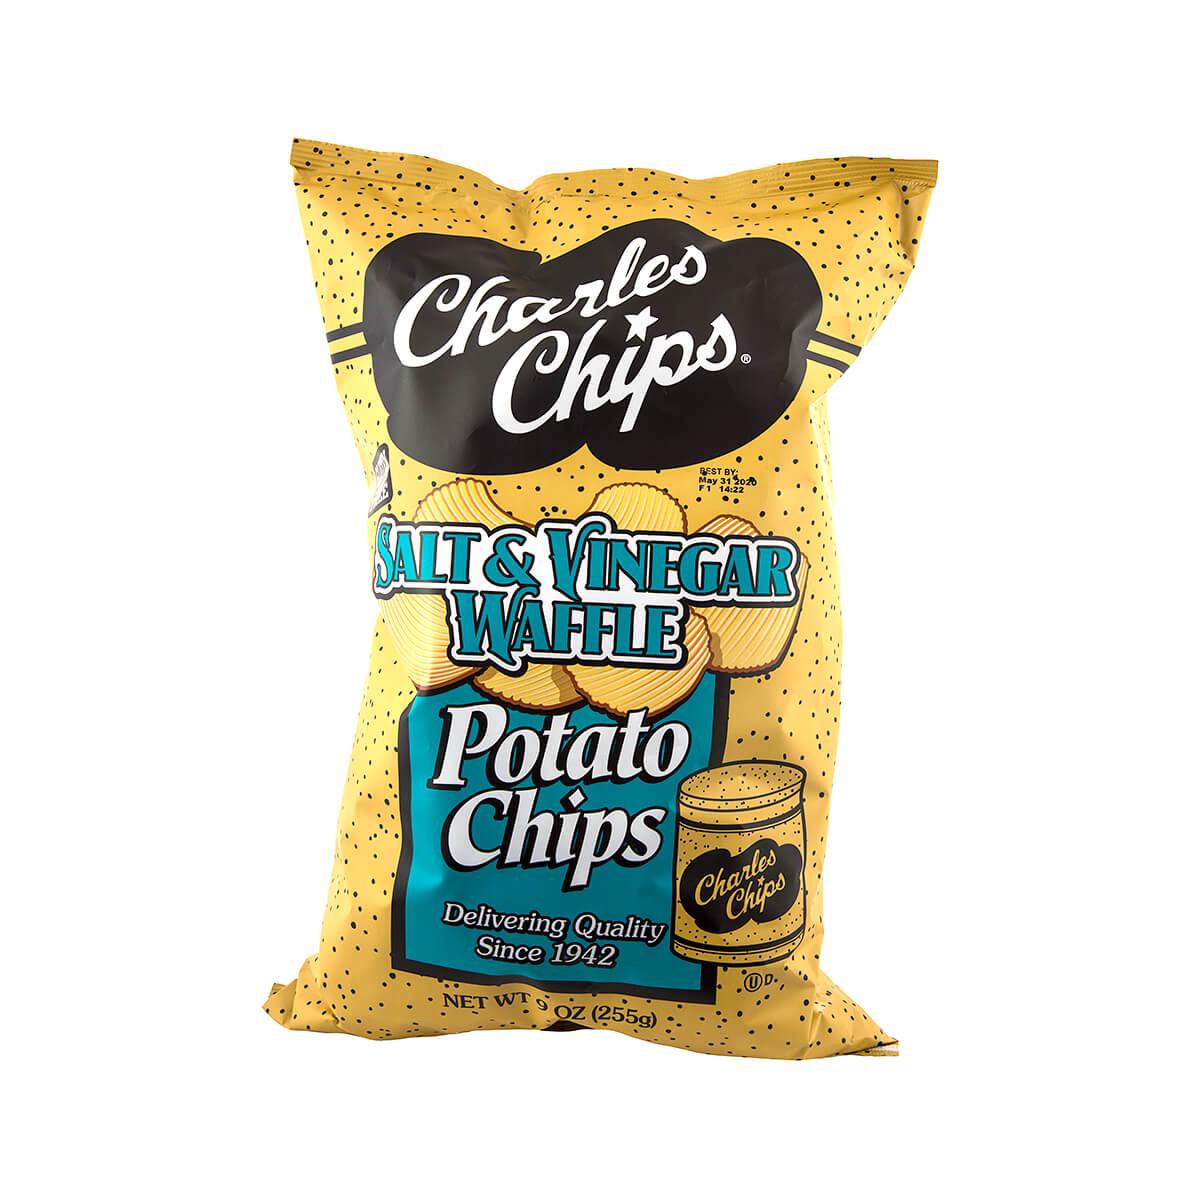  Salt Vinegar Waffle Potato Chips